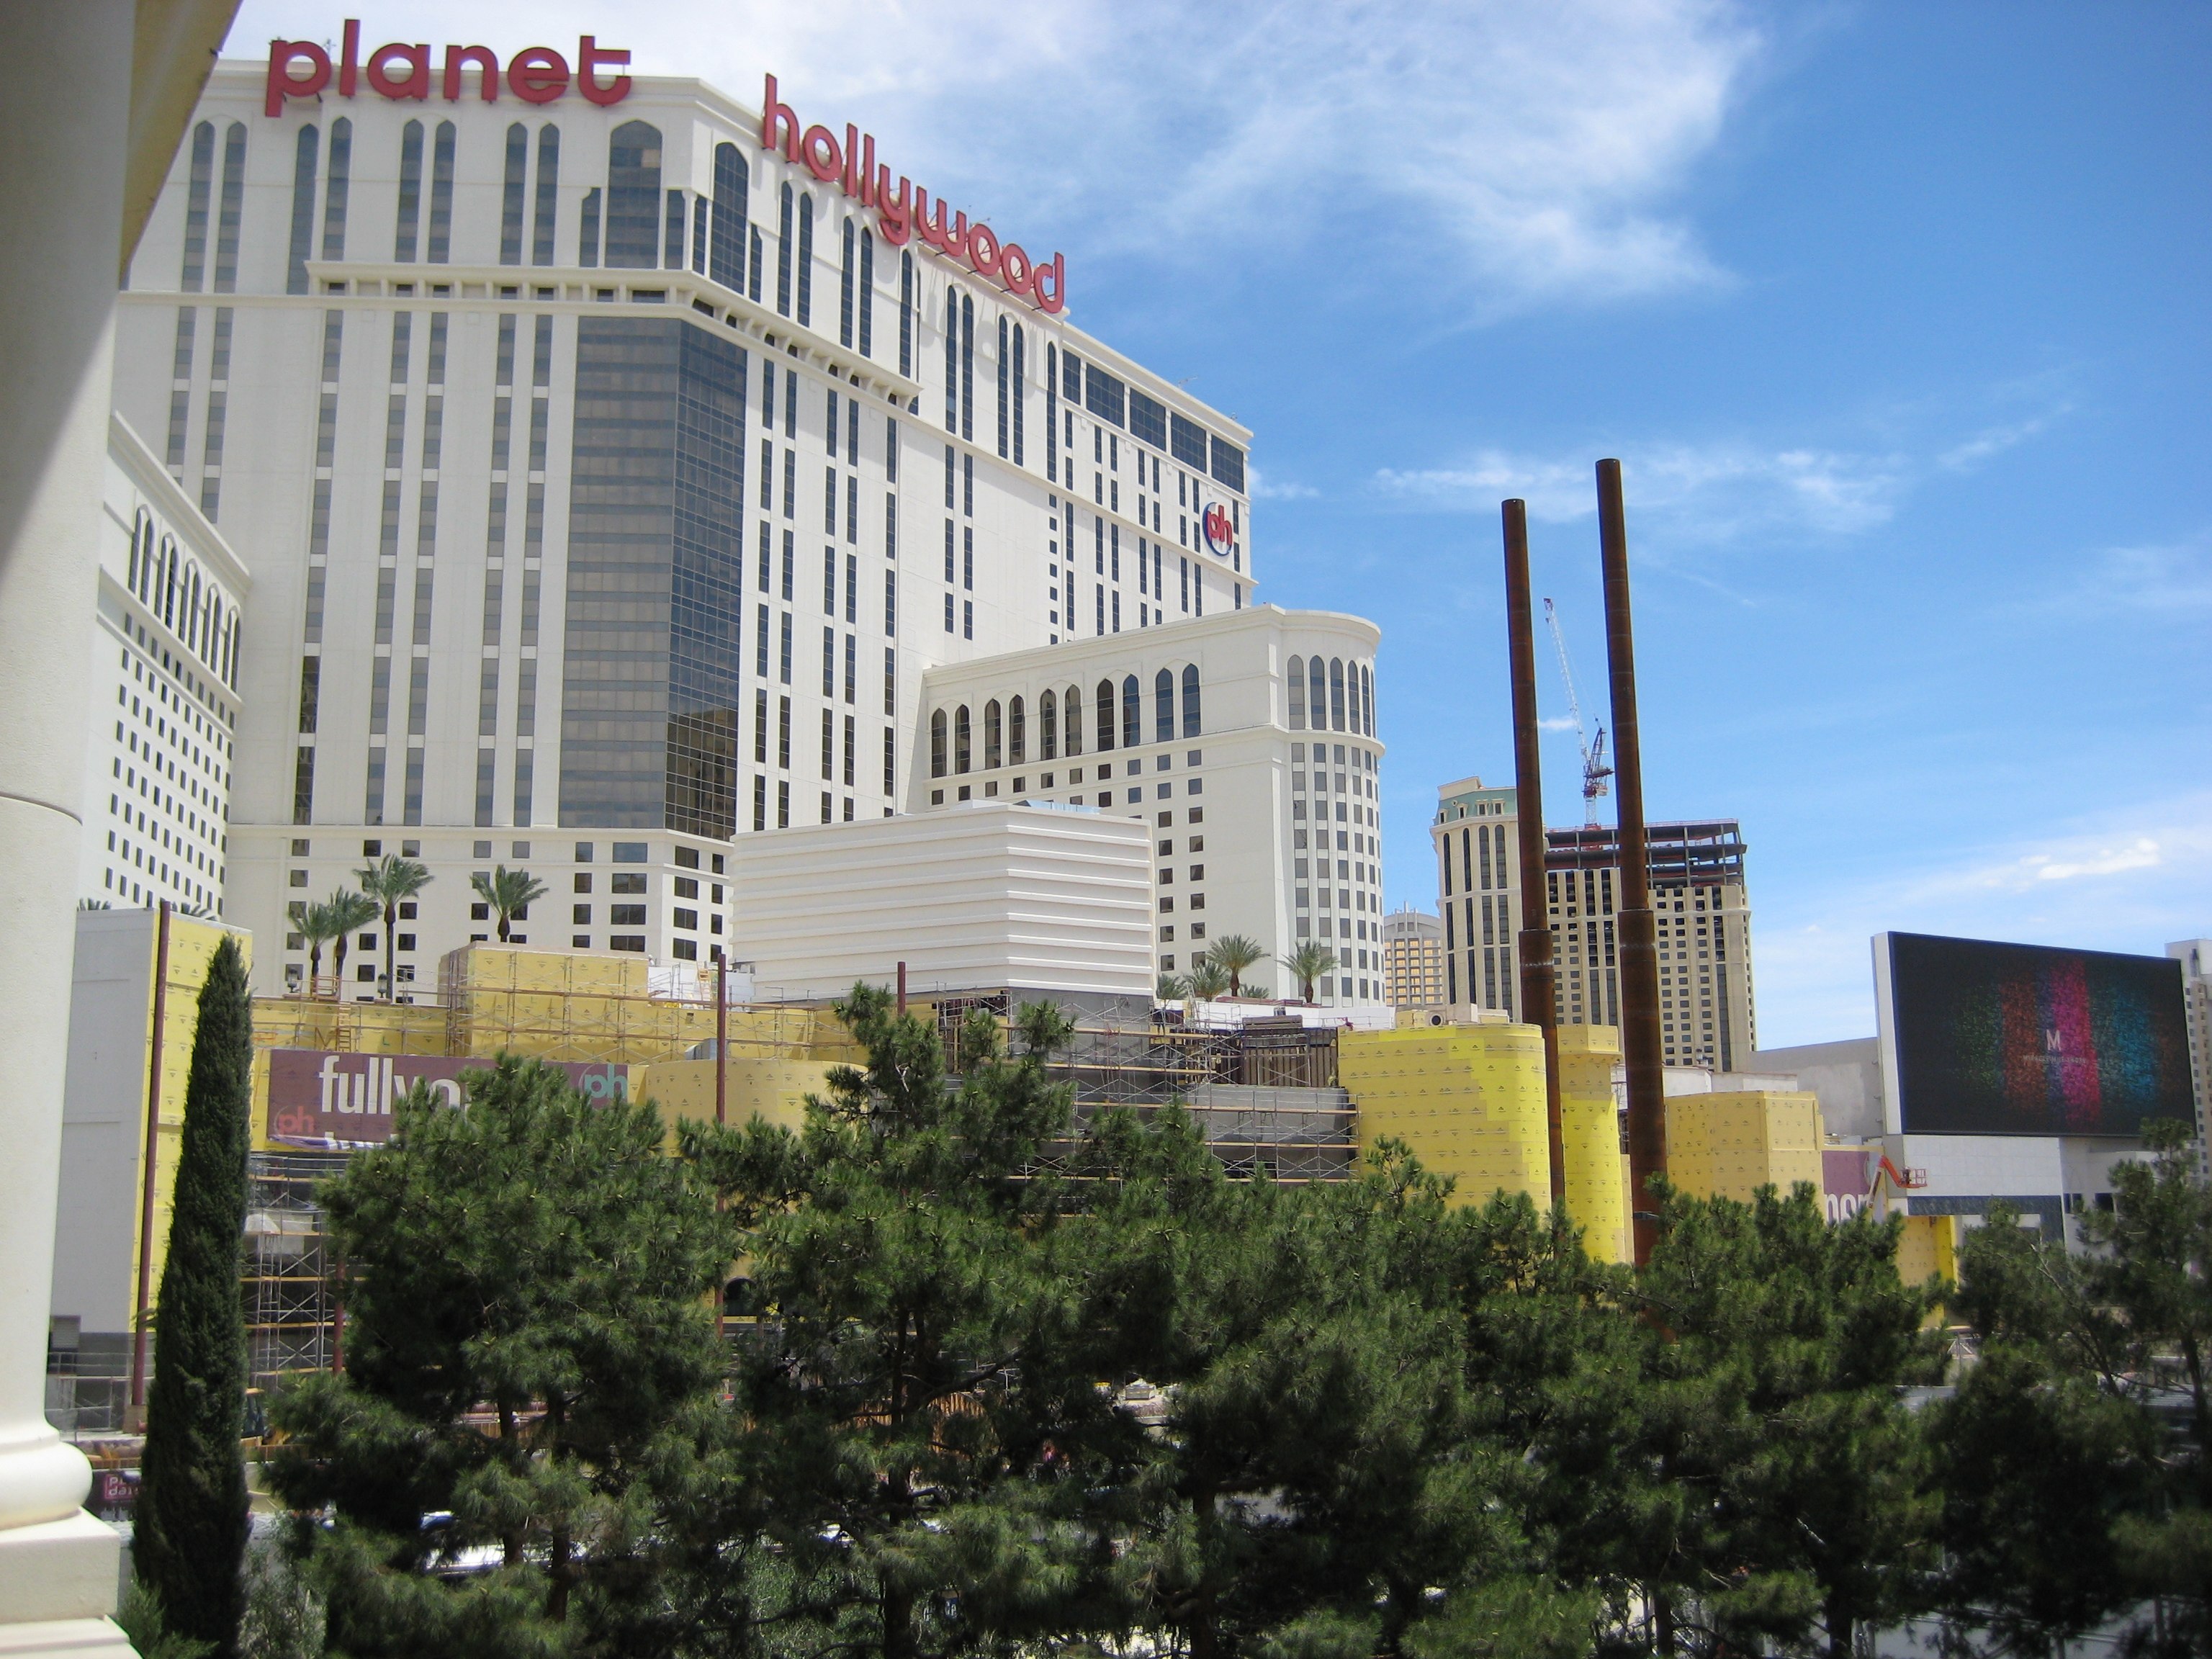 Planet Hollywood Las Vegas Map - Hotel - United States - Mapcarta